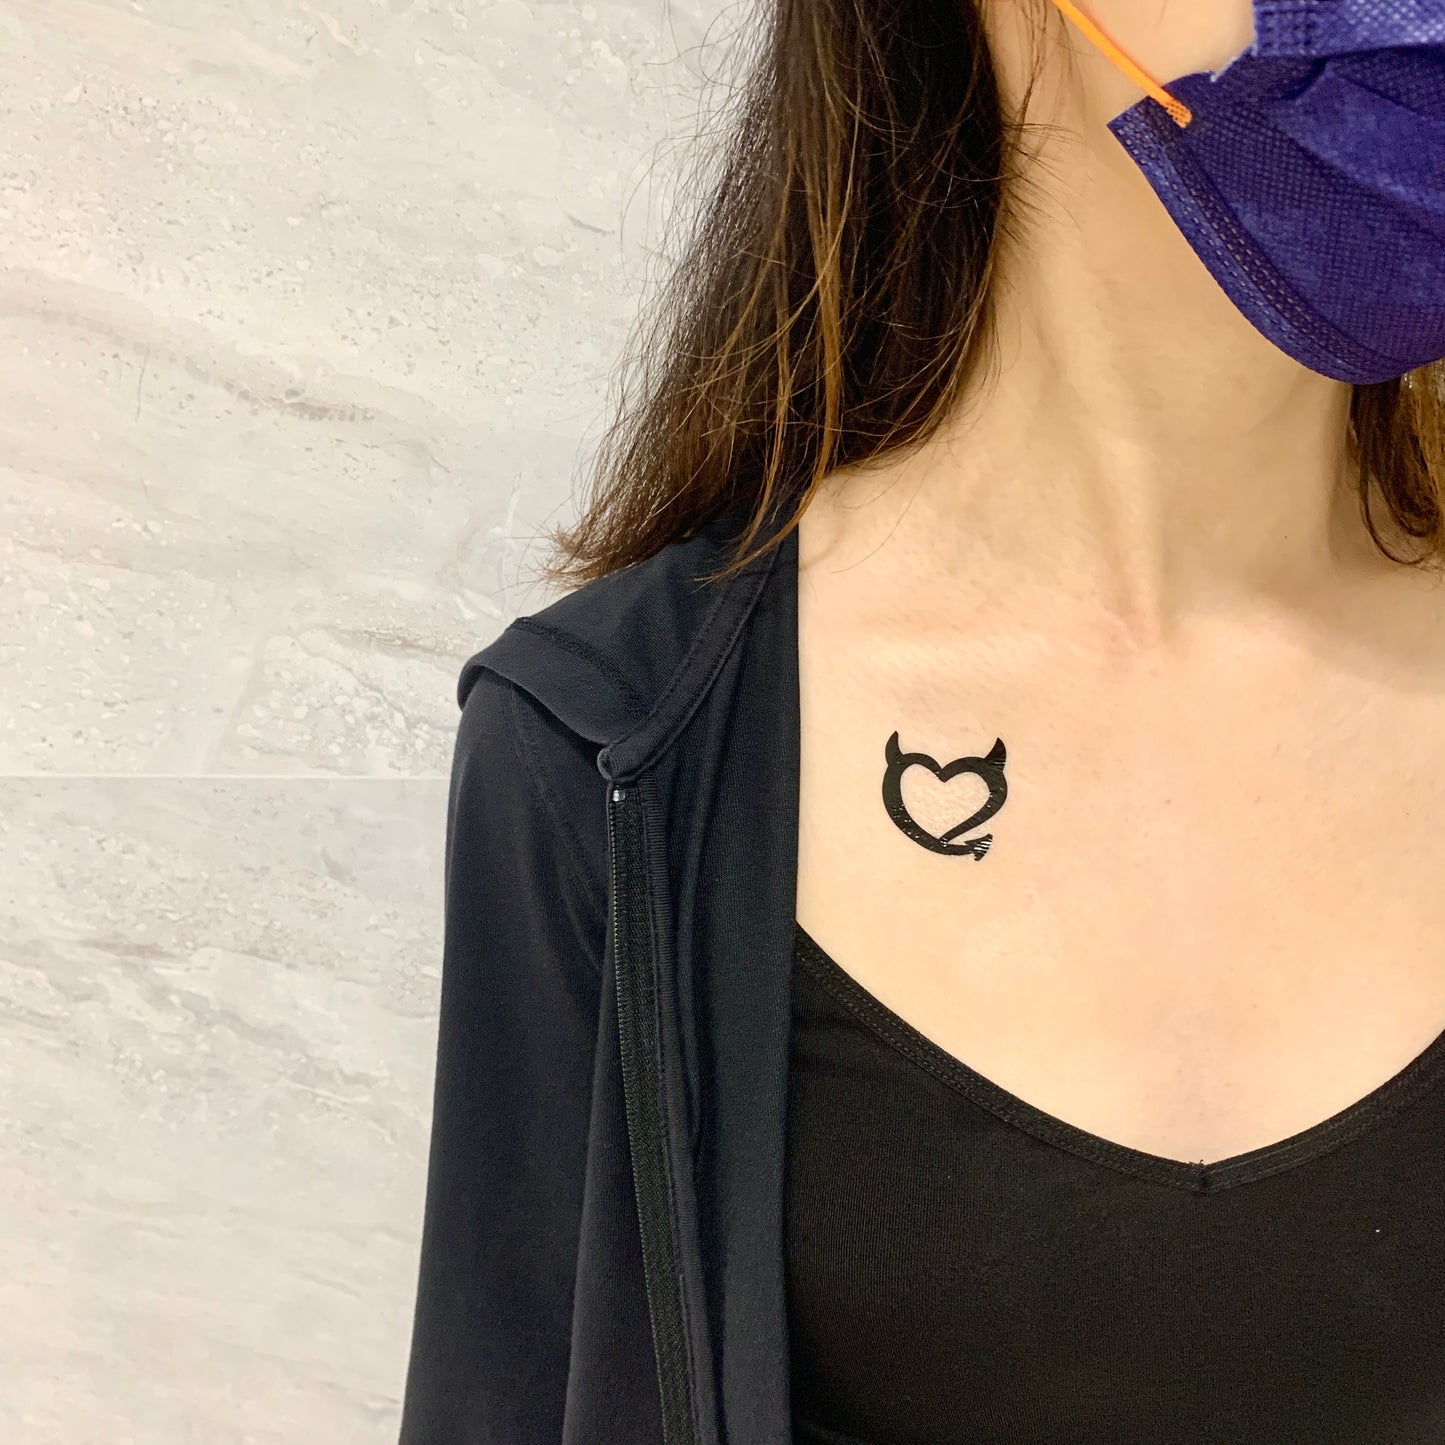 fake small she devil heart horns tail Minimalist temporary tattoo sticker design idea on shoulder chest collarbone